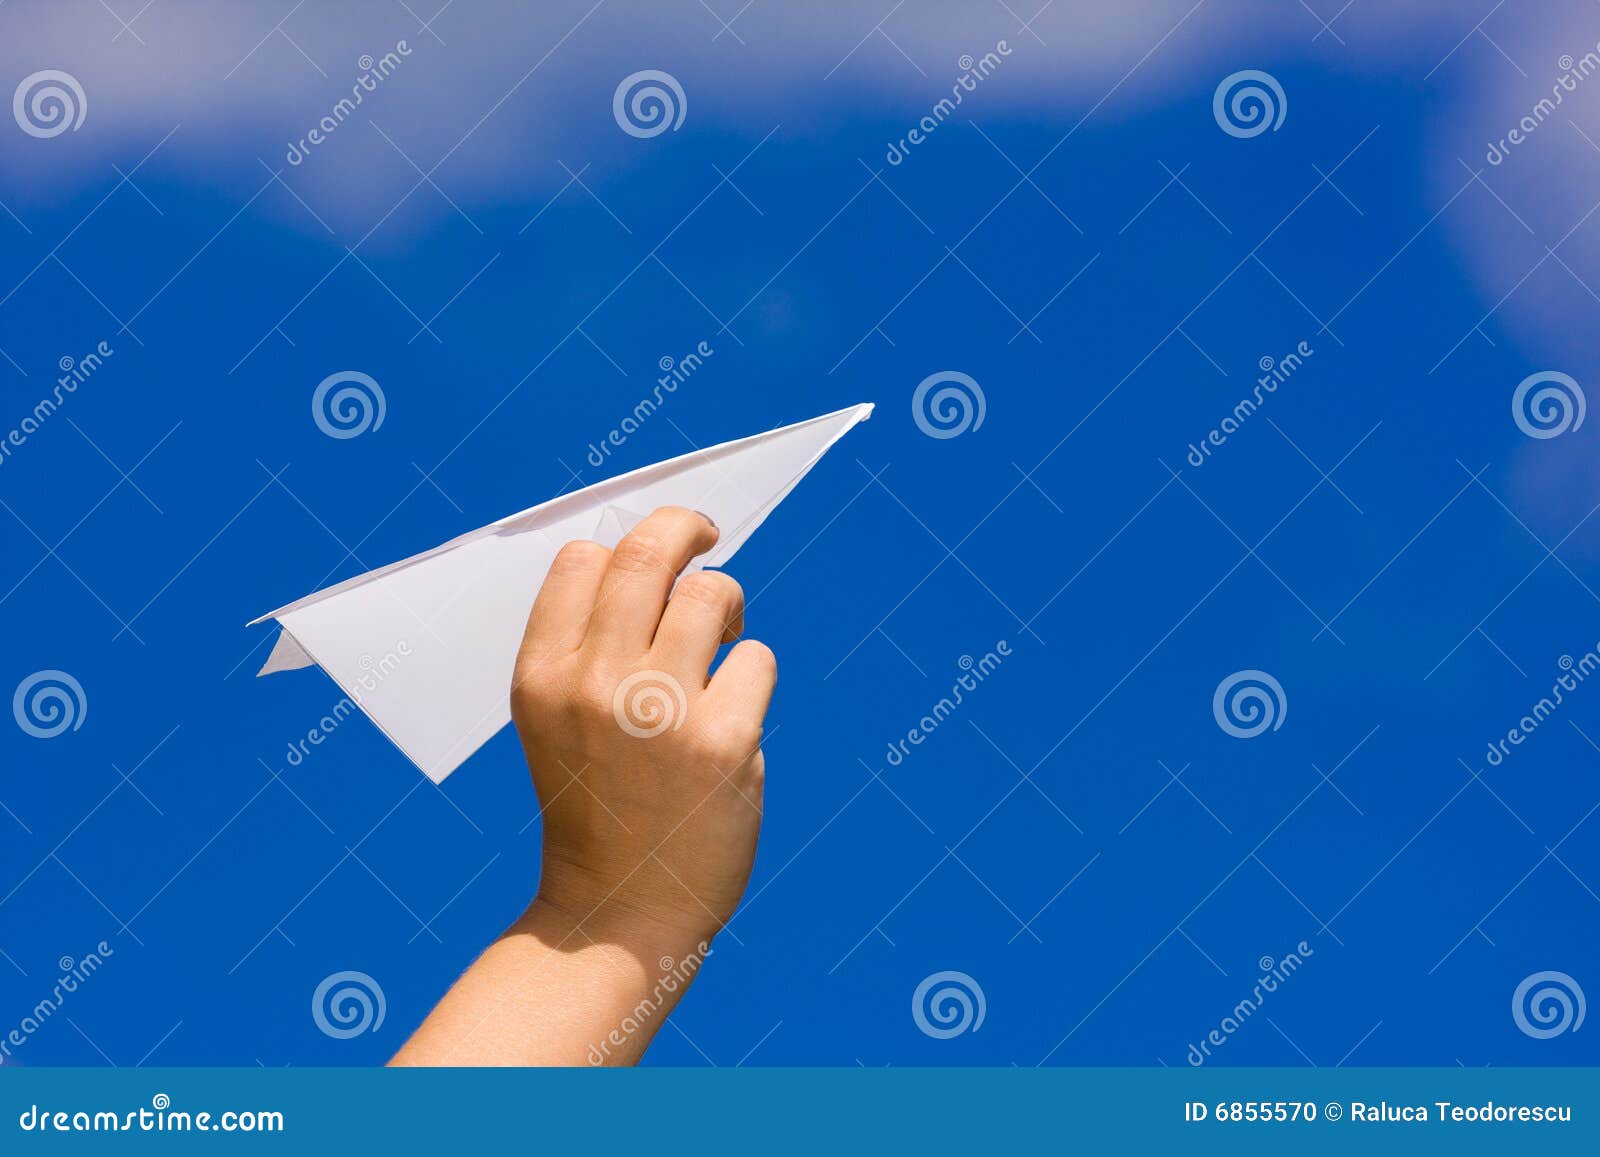 launching a paper plane